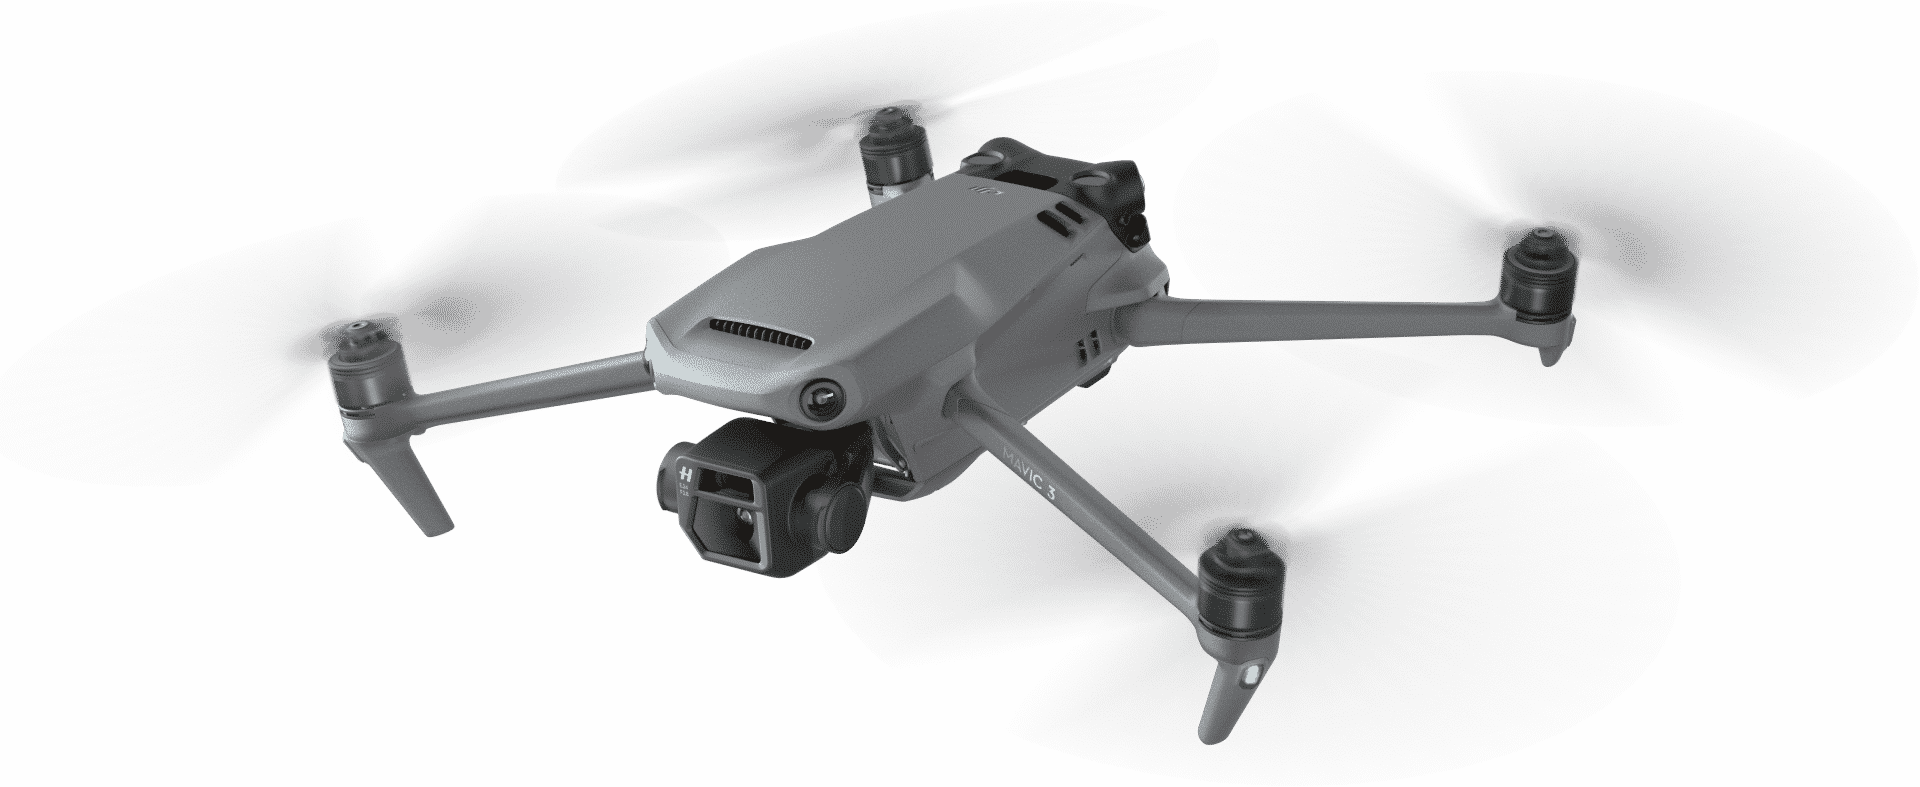 DJI Mavic Fly More Combo Drone Drone Parts Center